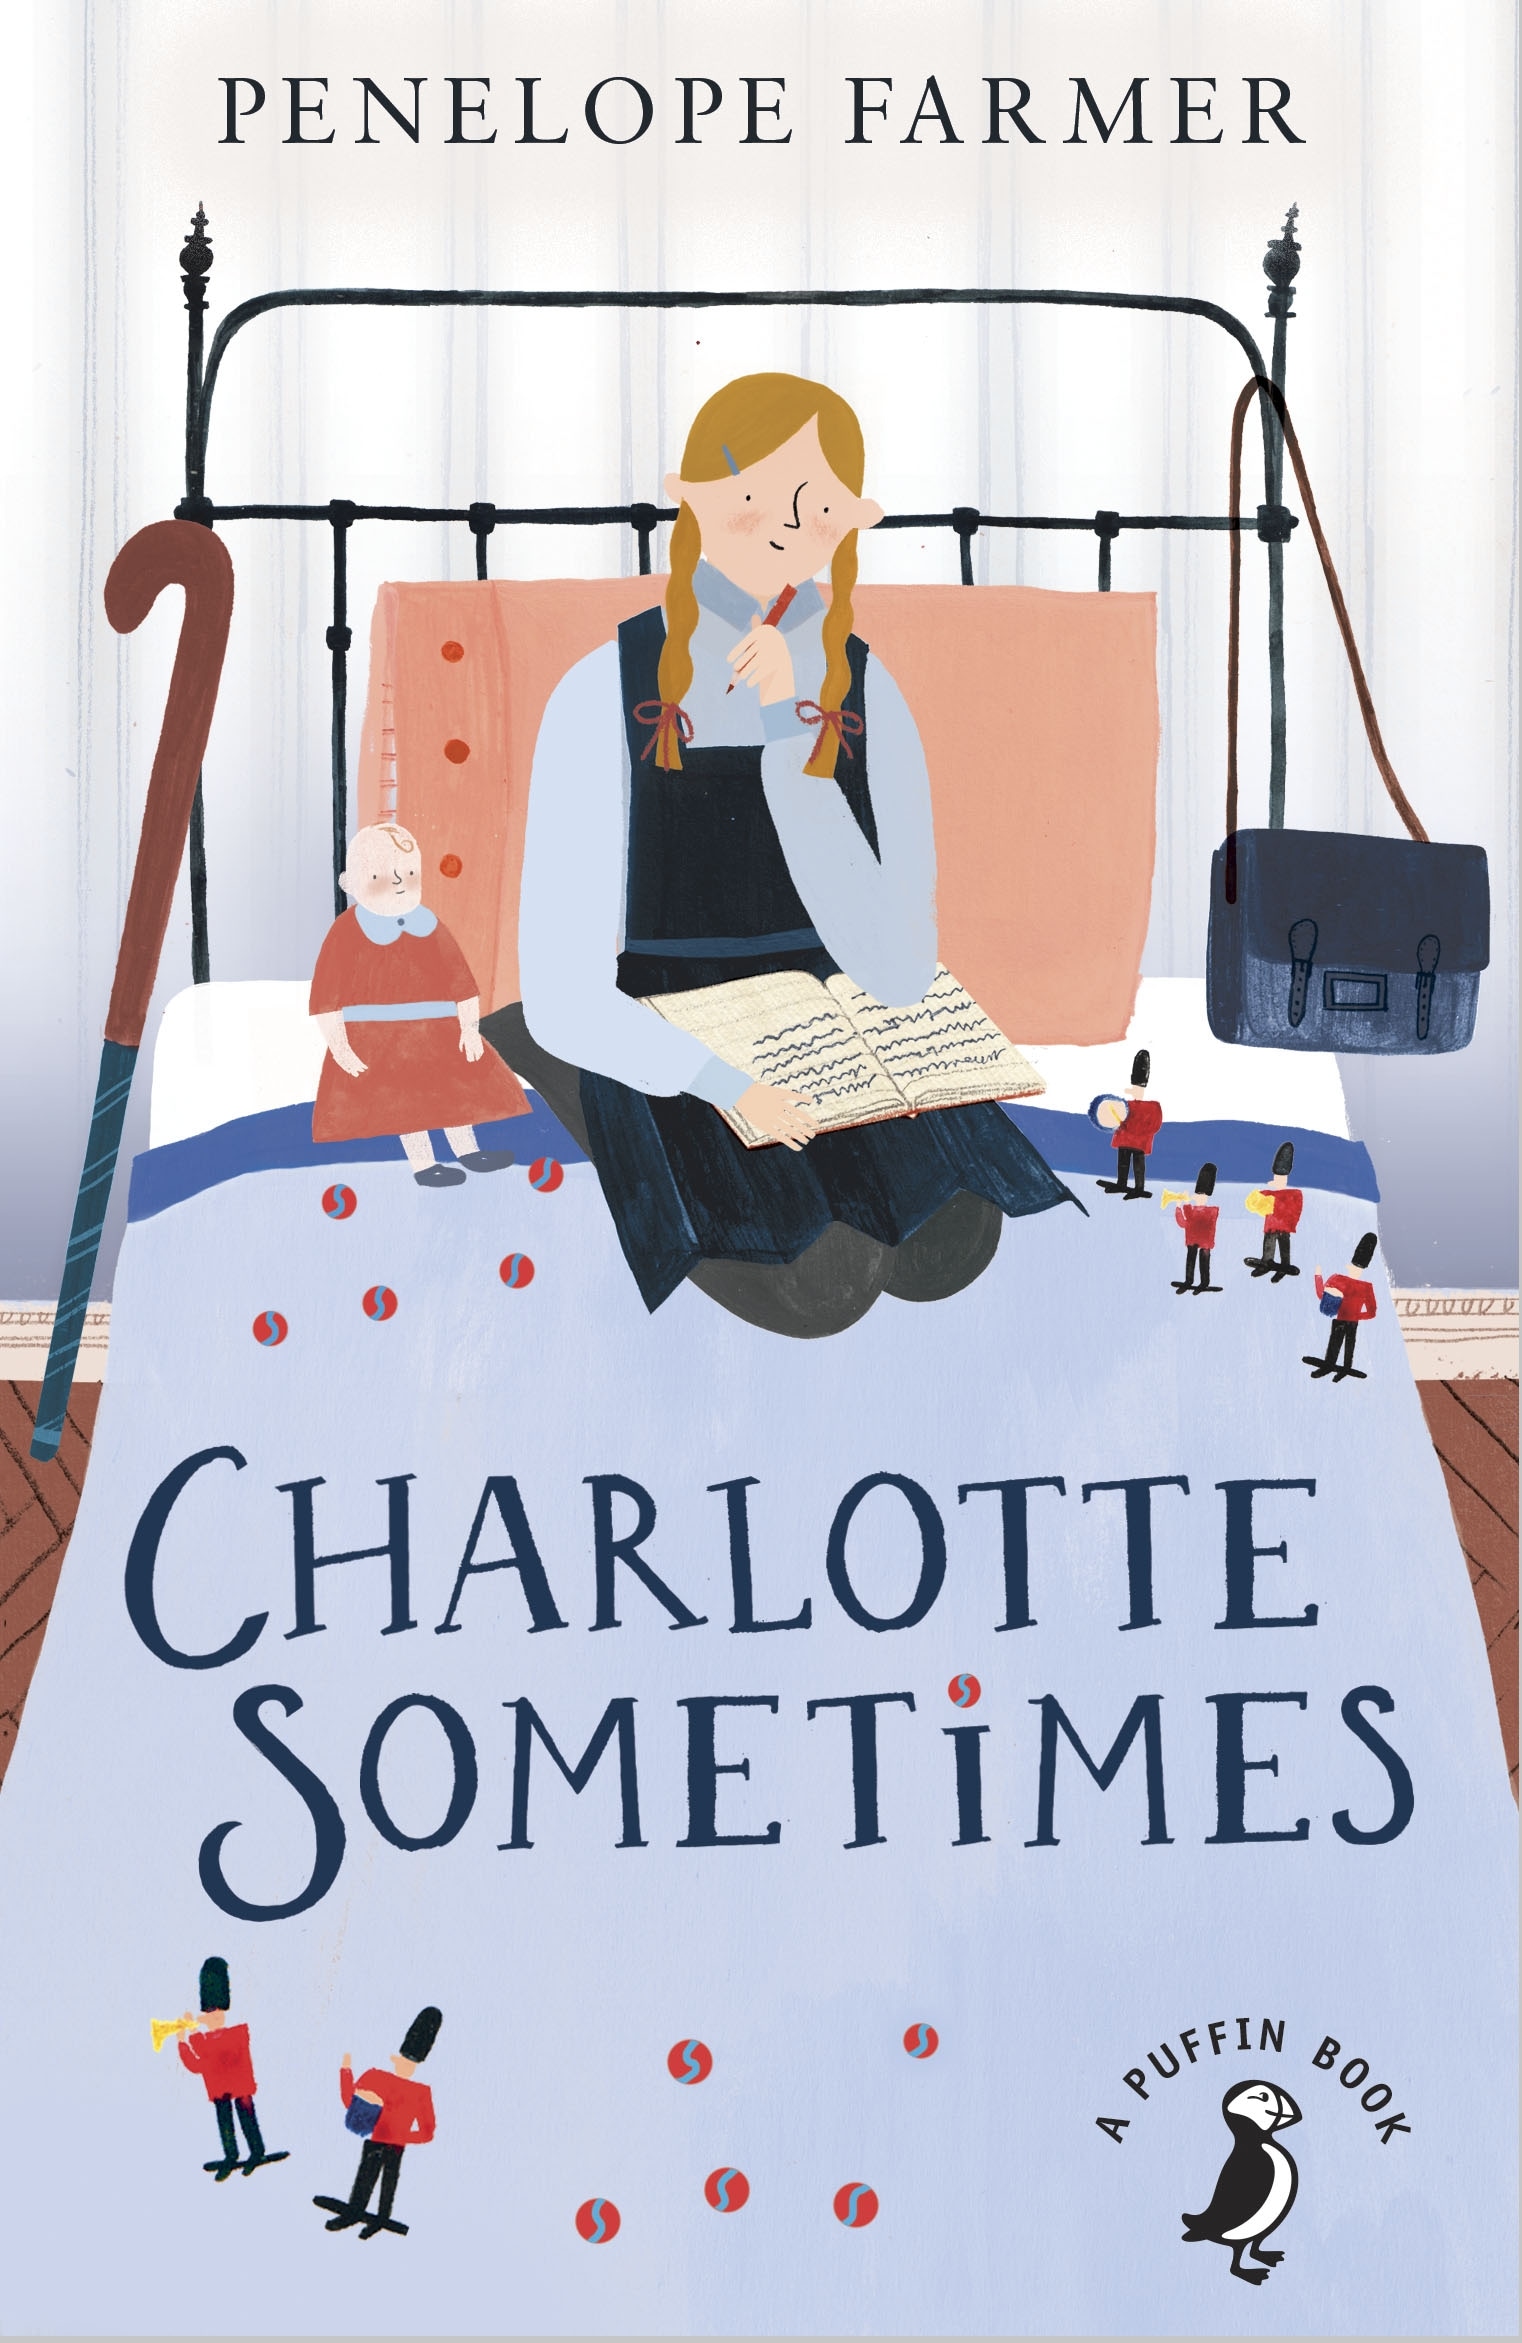 Book “Charlotte Sometimes” by Penelope Farmer — June 6, 2019